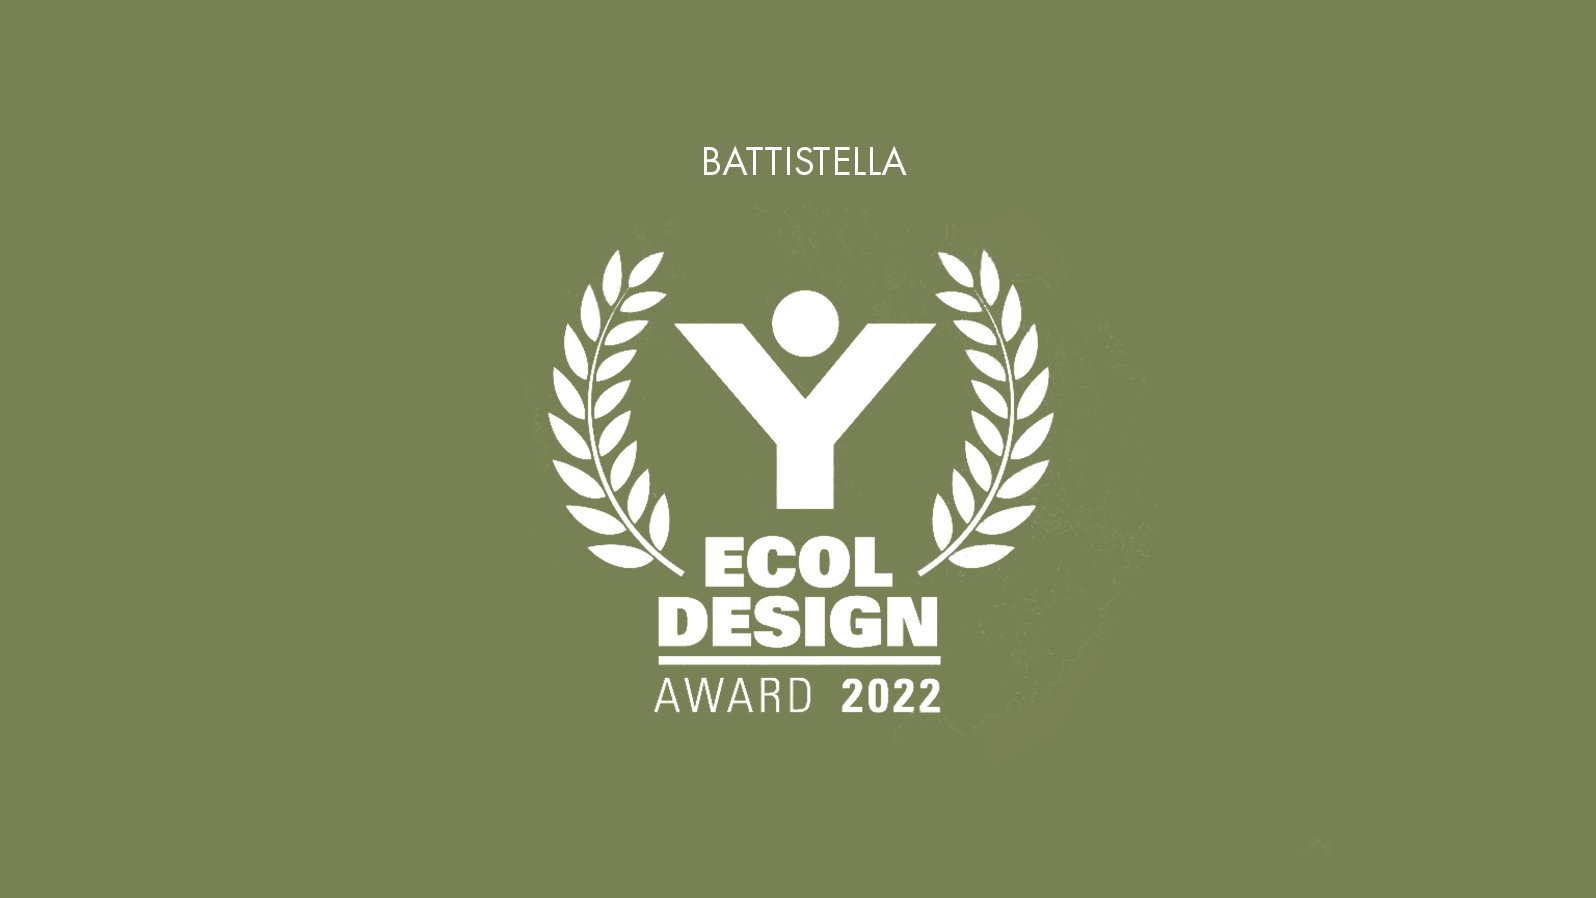 Recycla a récompensé Battistella avec l'ECOL DESIGN AWARD